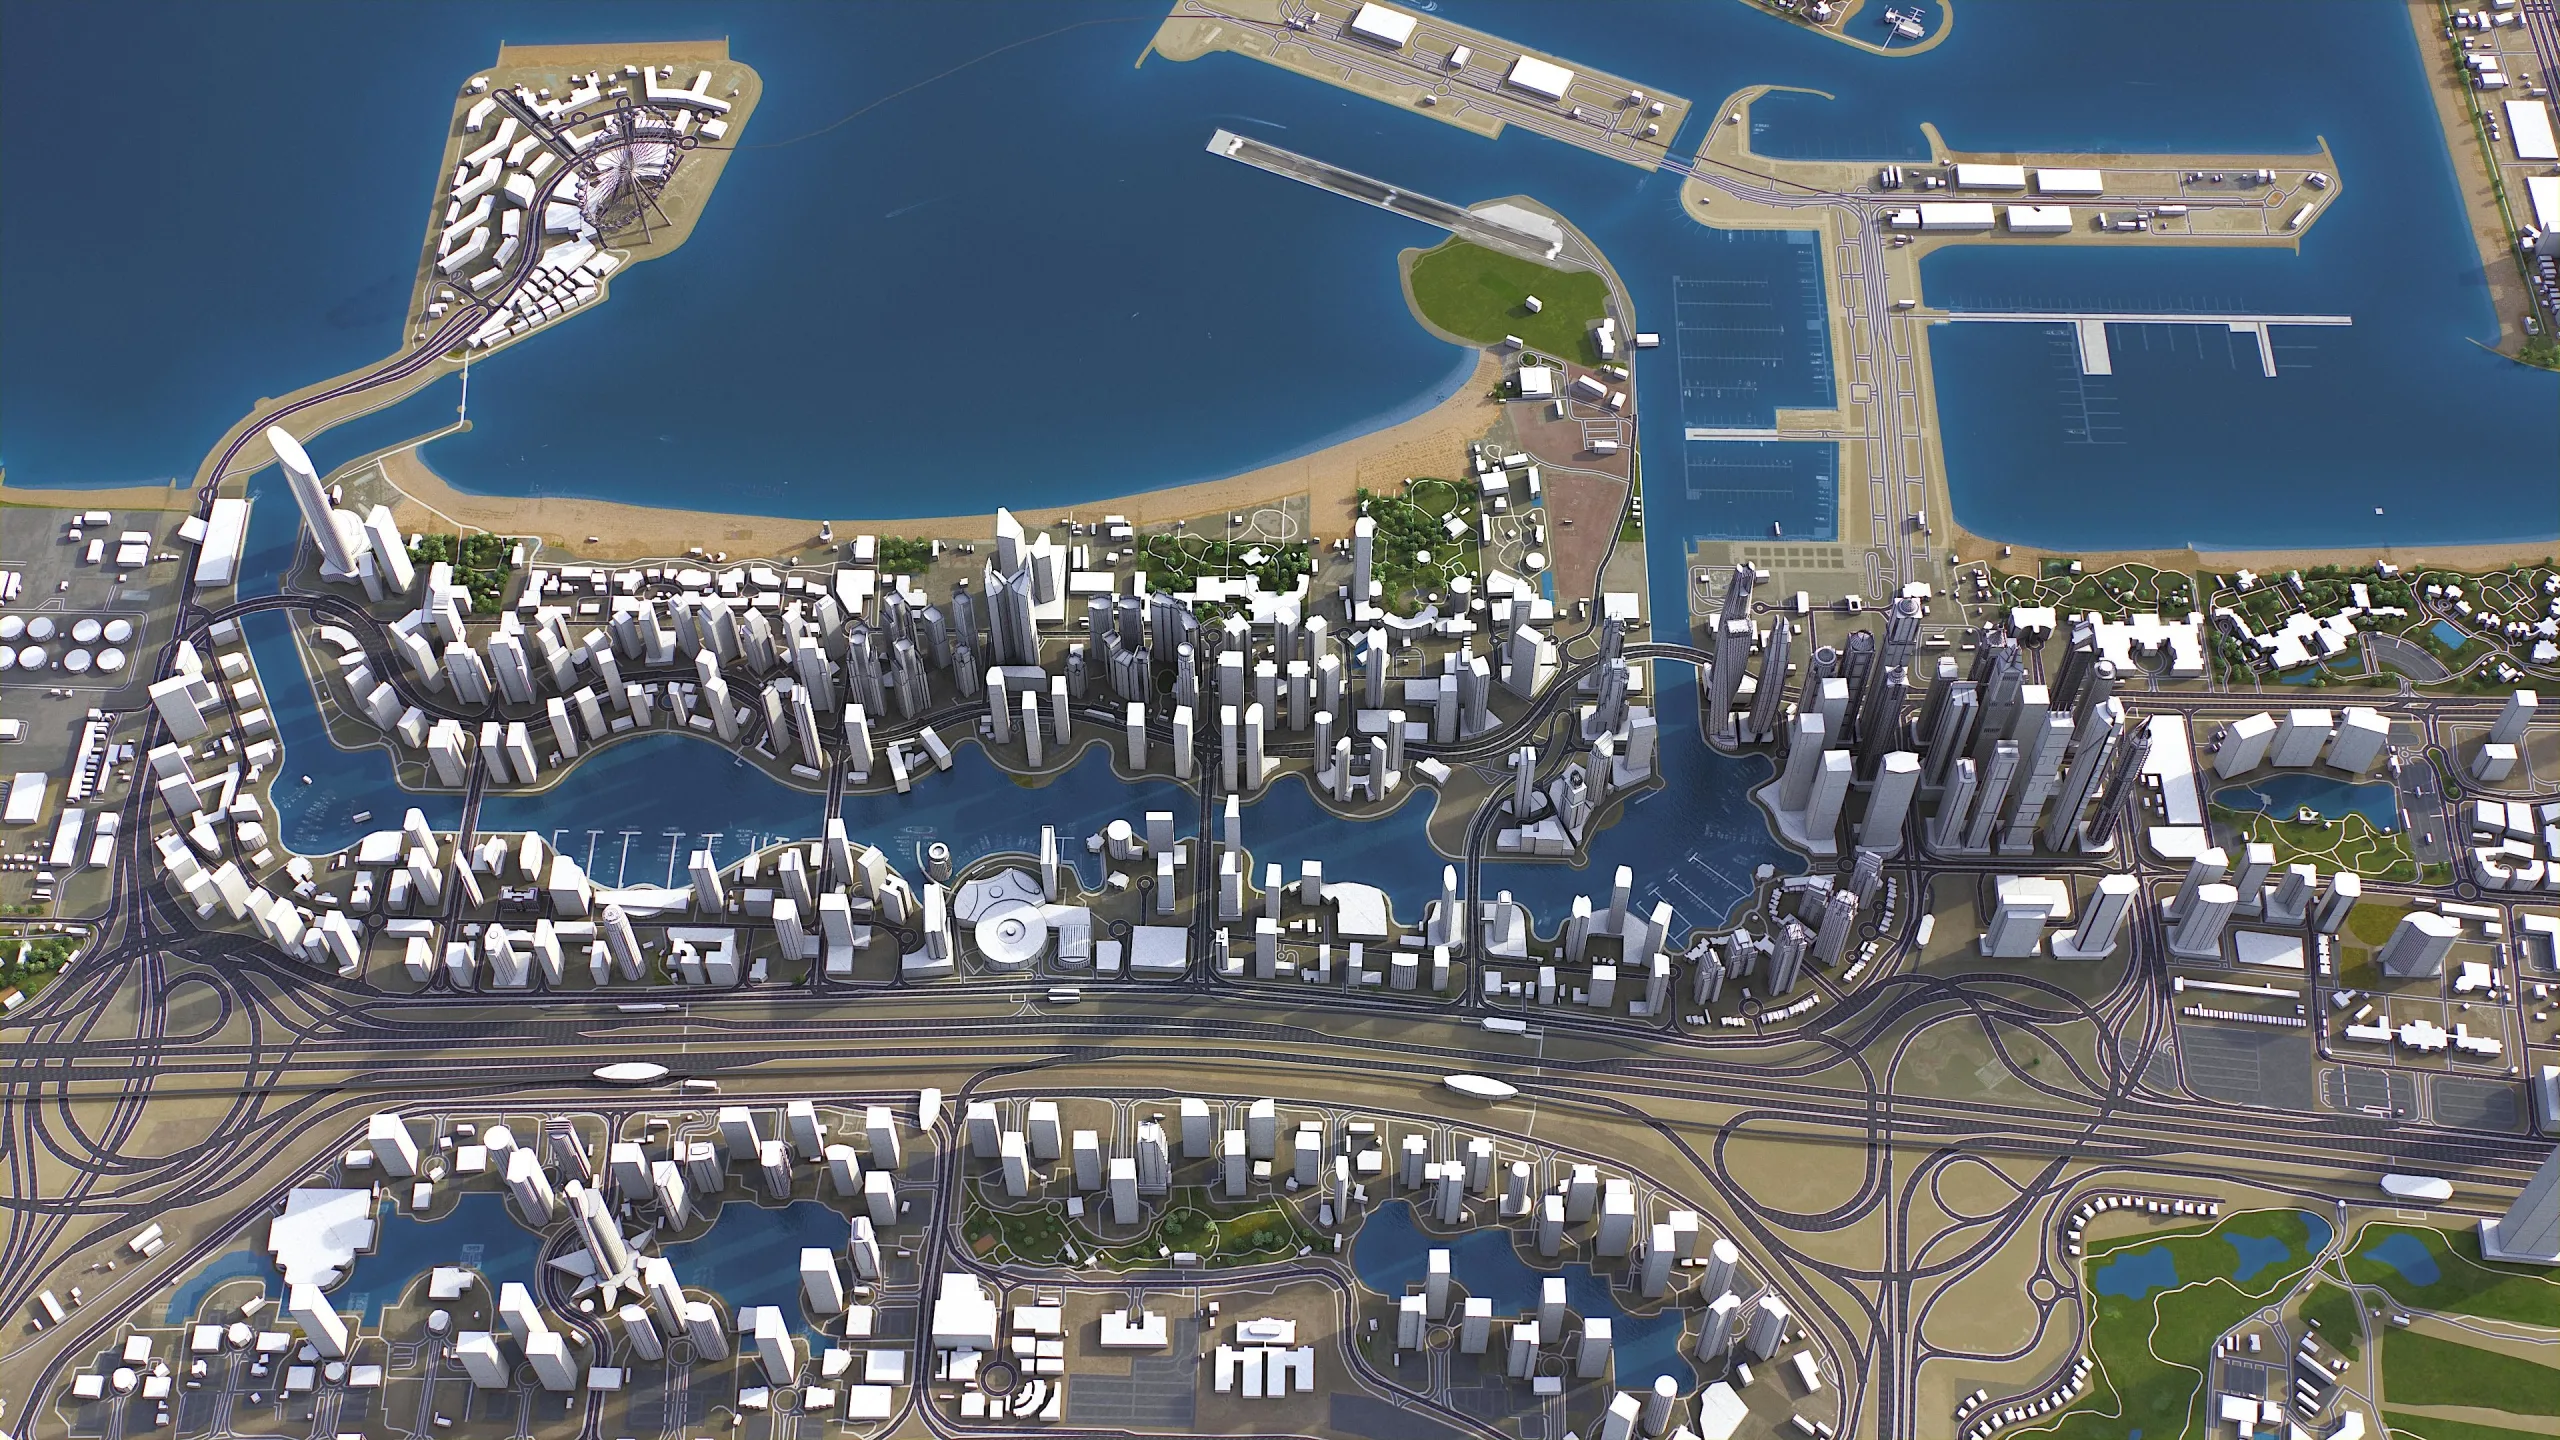 Dubai - 3D city model